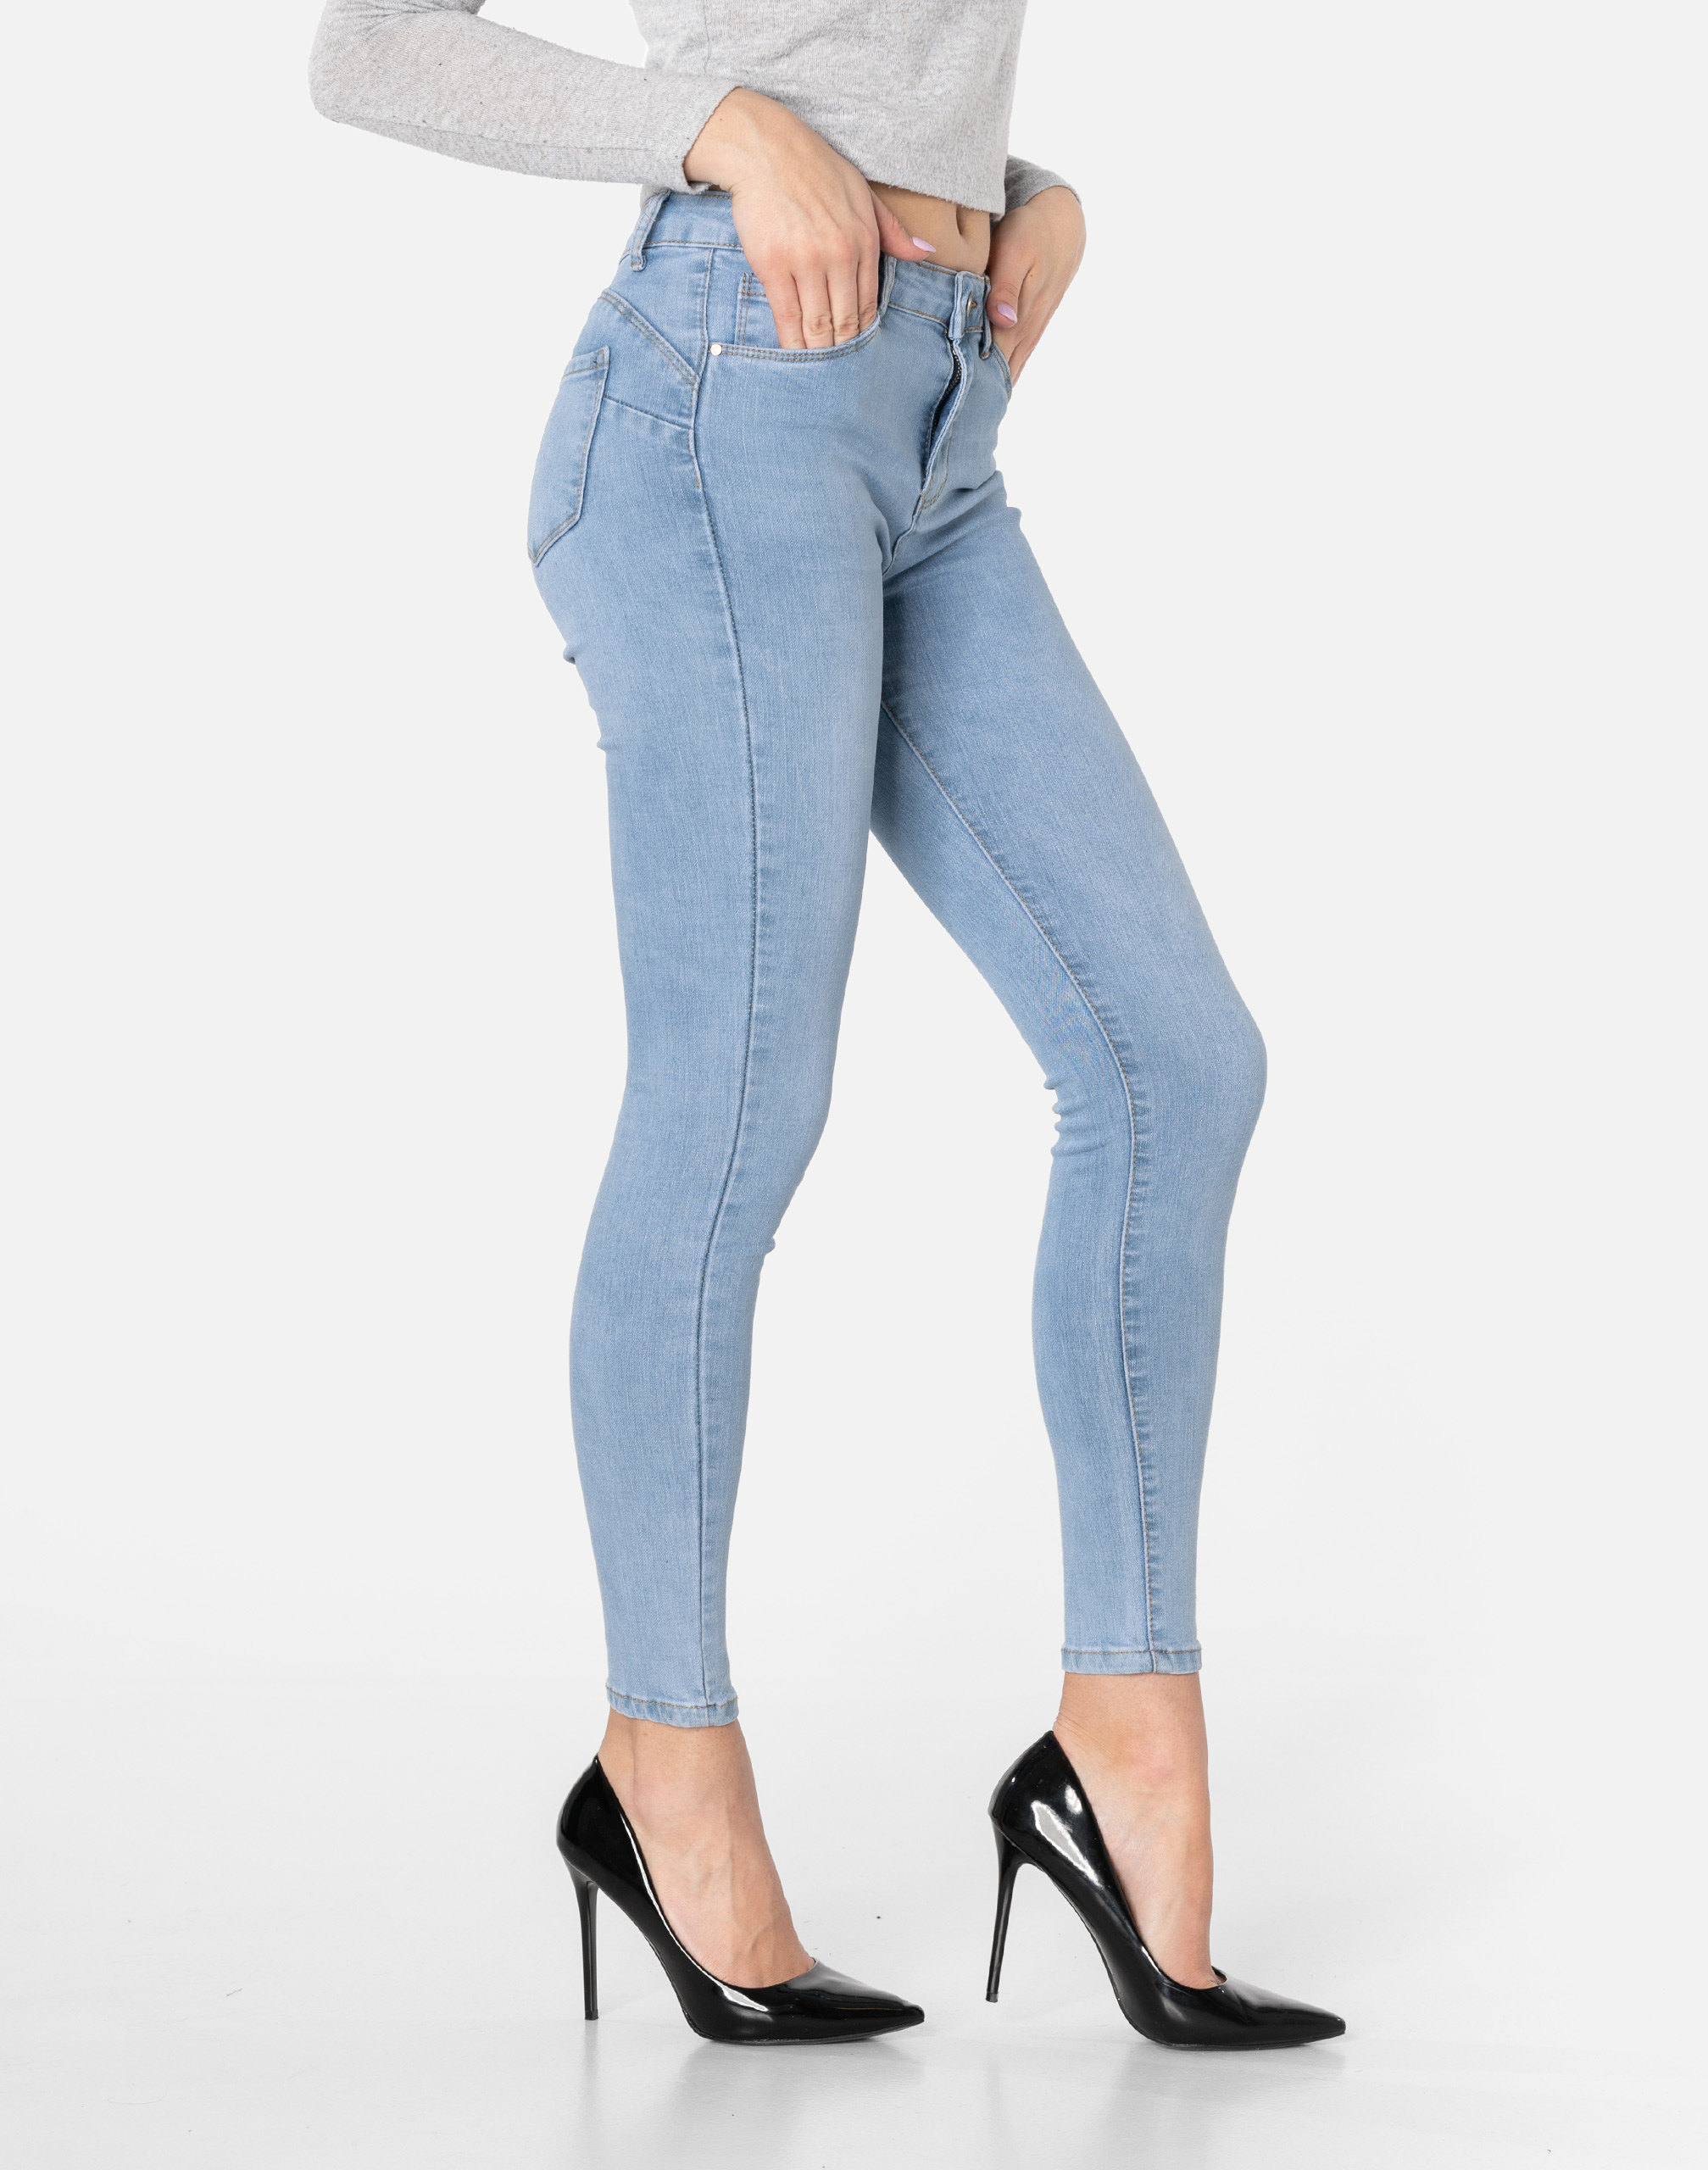 Брюки джинсы пуш-ап женские 3711 R 74 см коллекция М. Сара коллекция